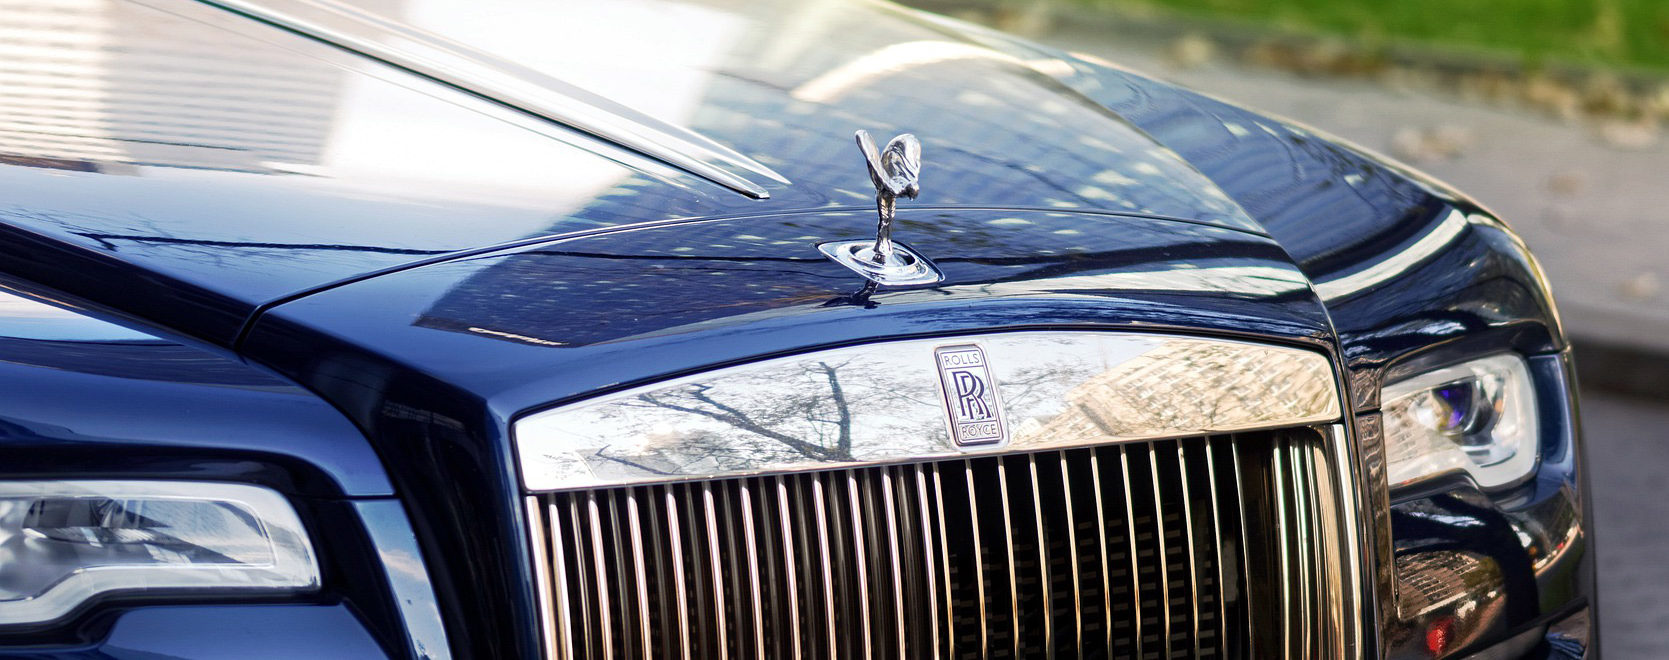 Rolls-Royce chauffeur-driven limo